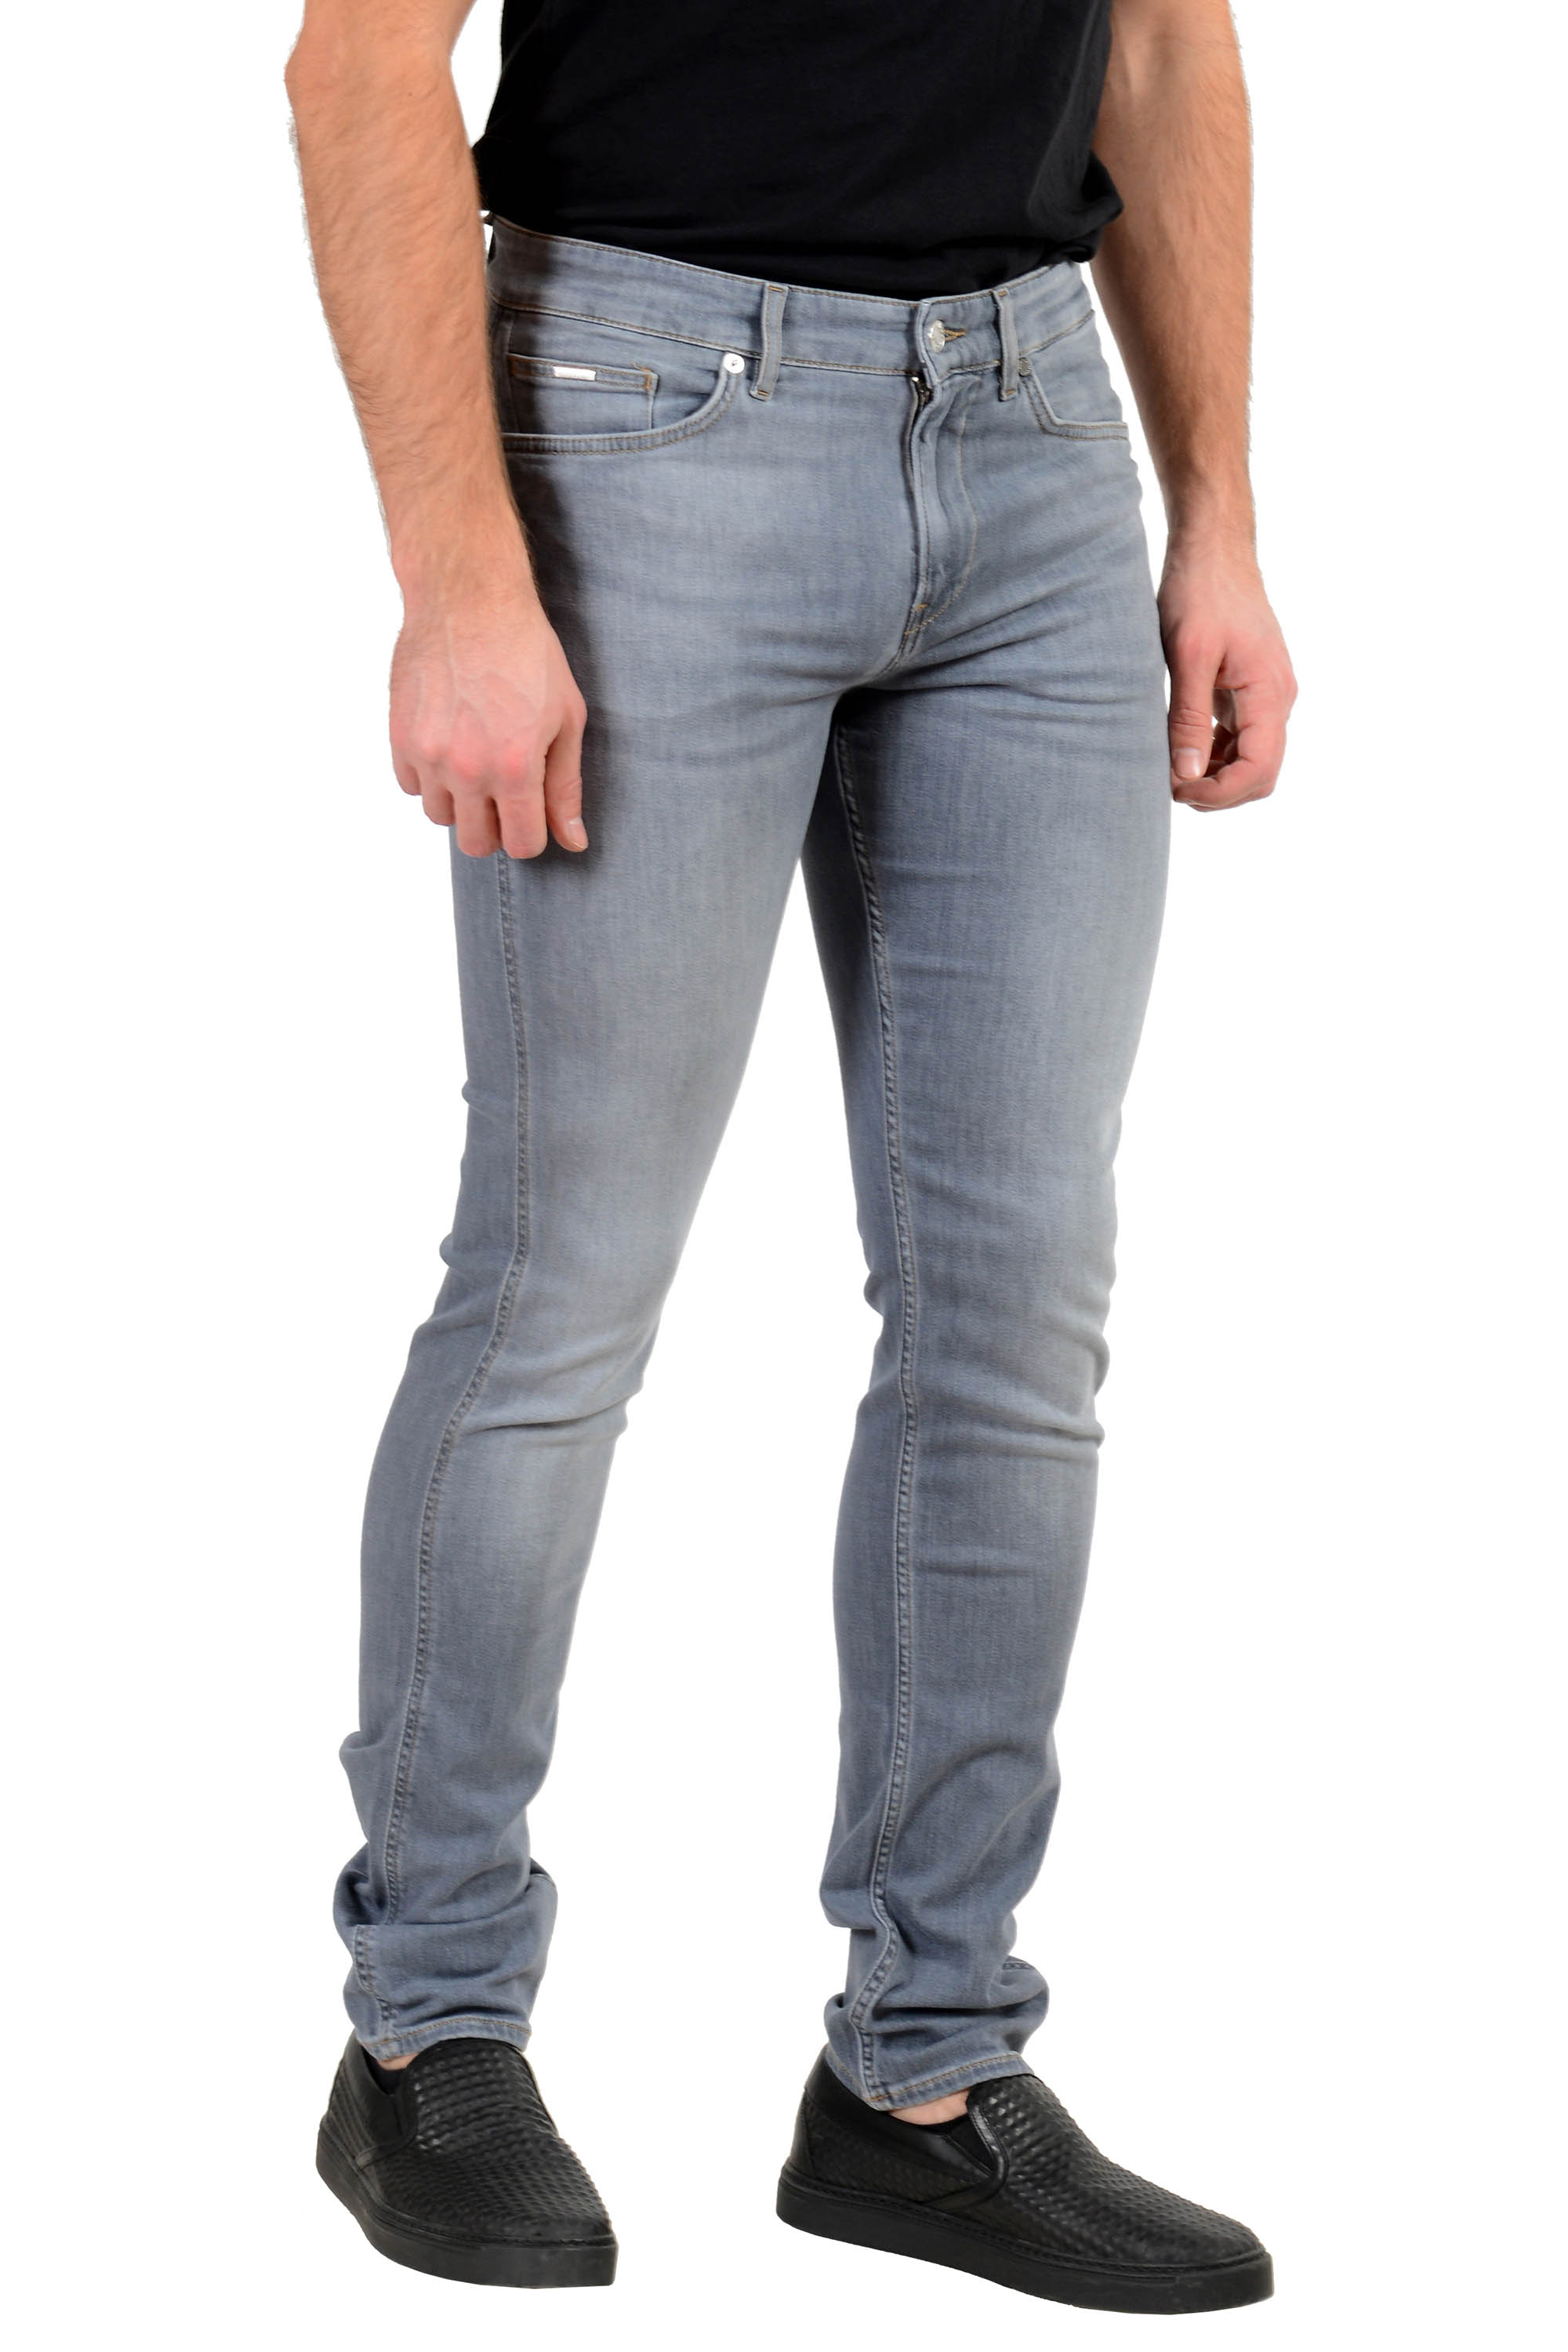 Edele Vaak gesproken voedsel Hugo Boss Men's "Delaware3" Slim Fit Gray Lightweight Stretch Jeans